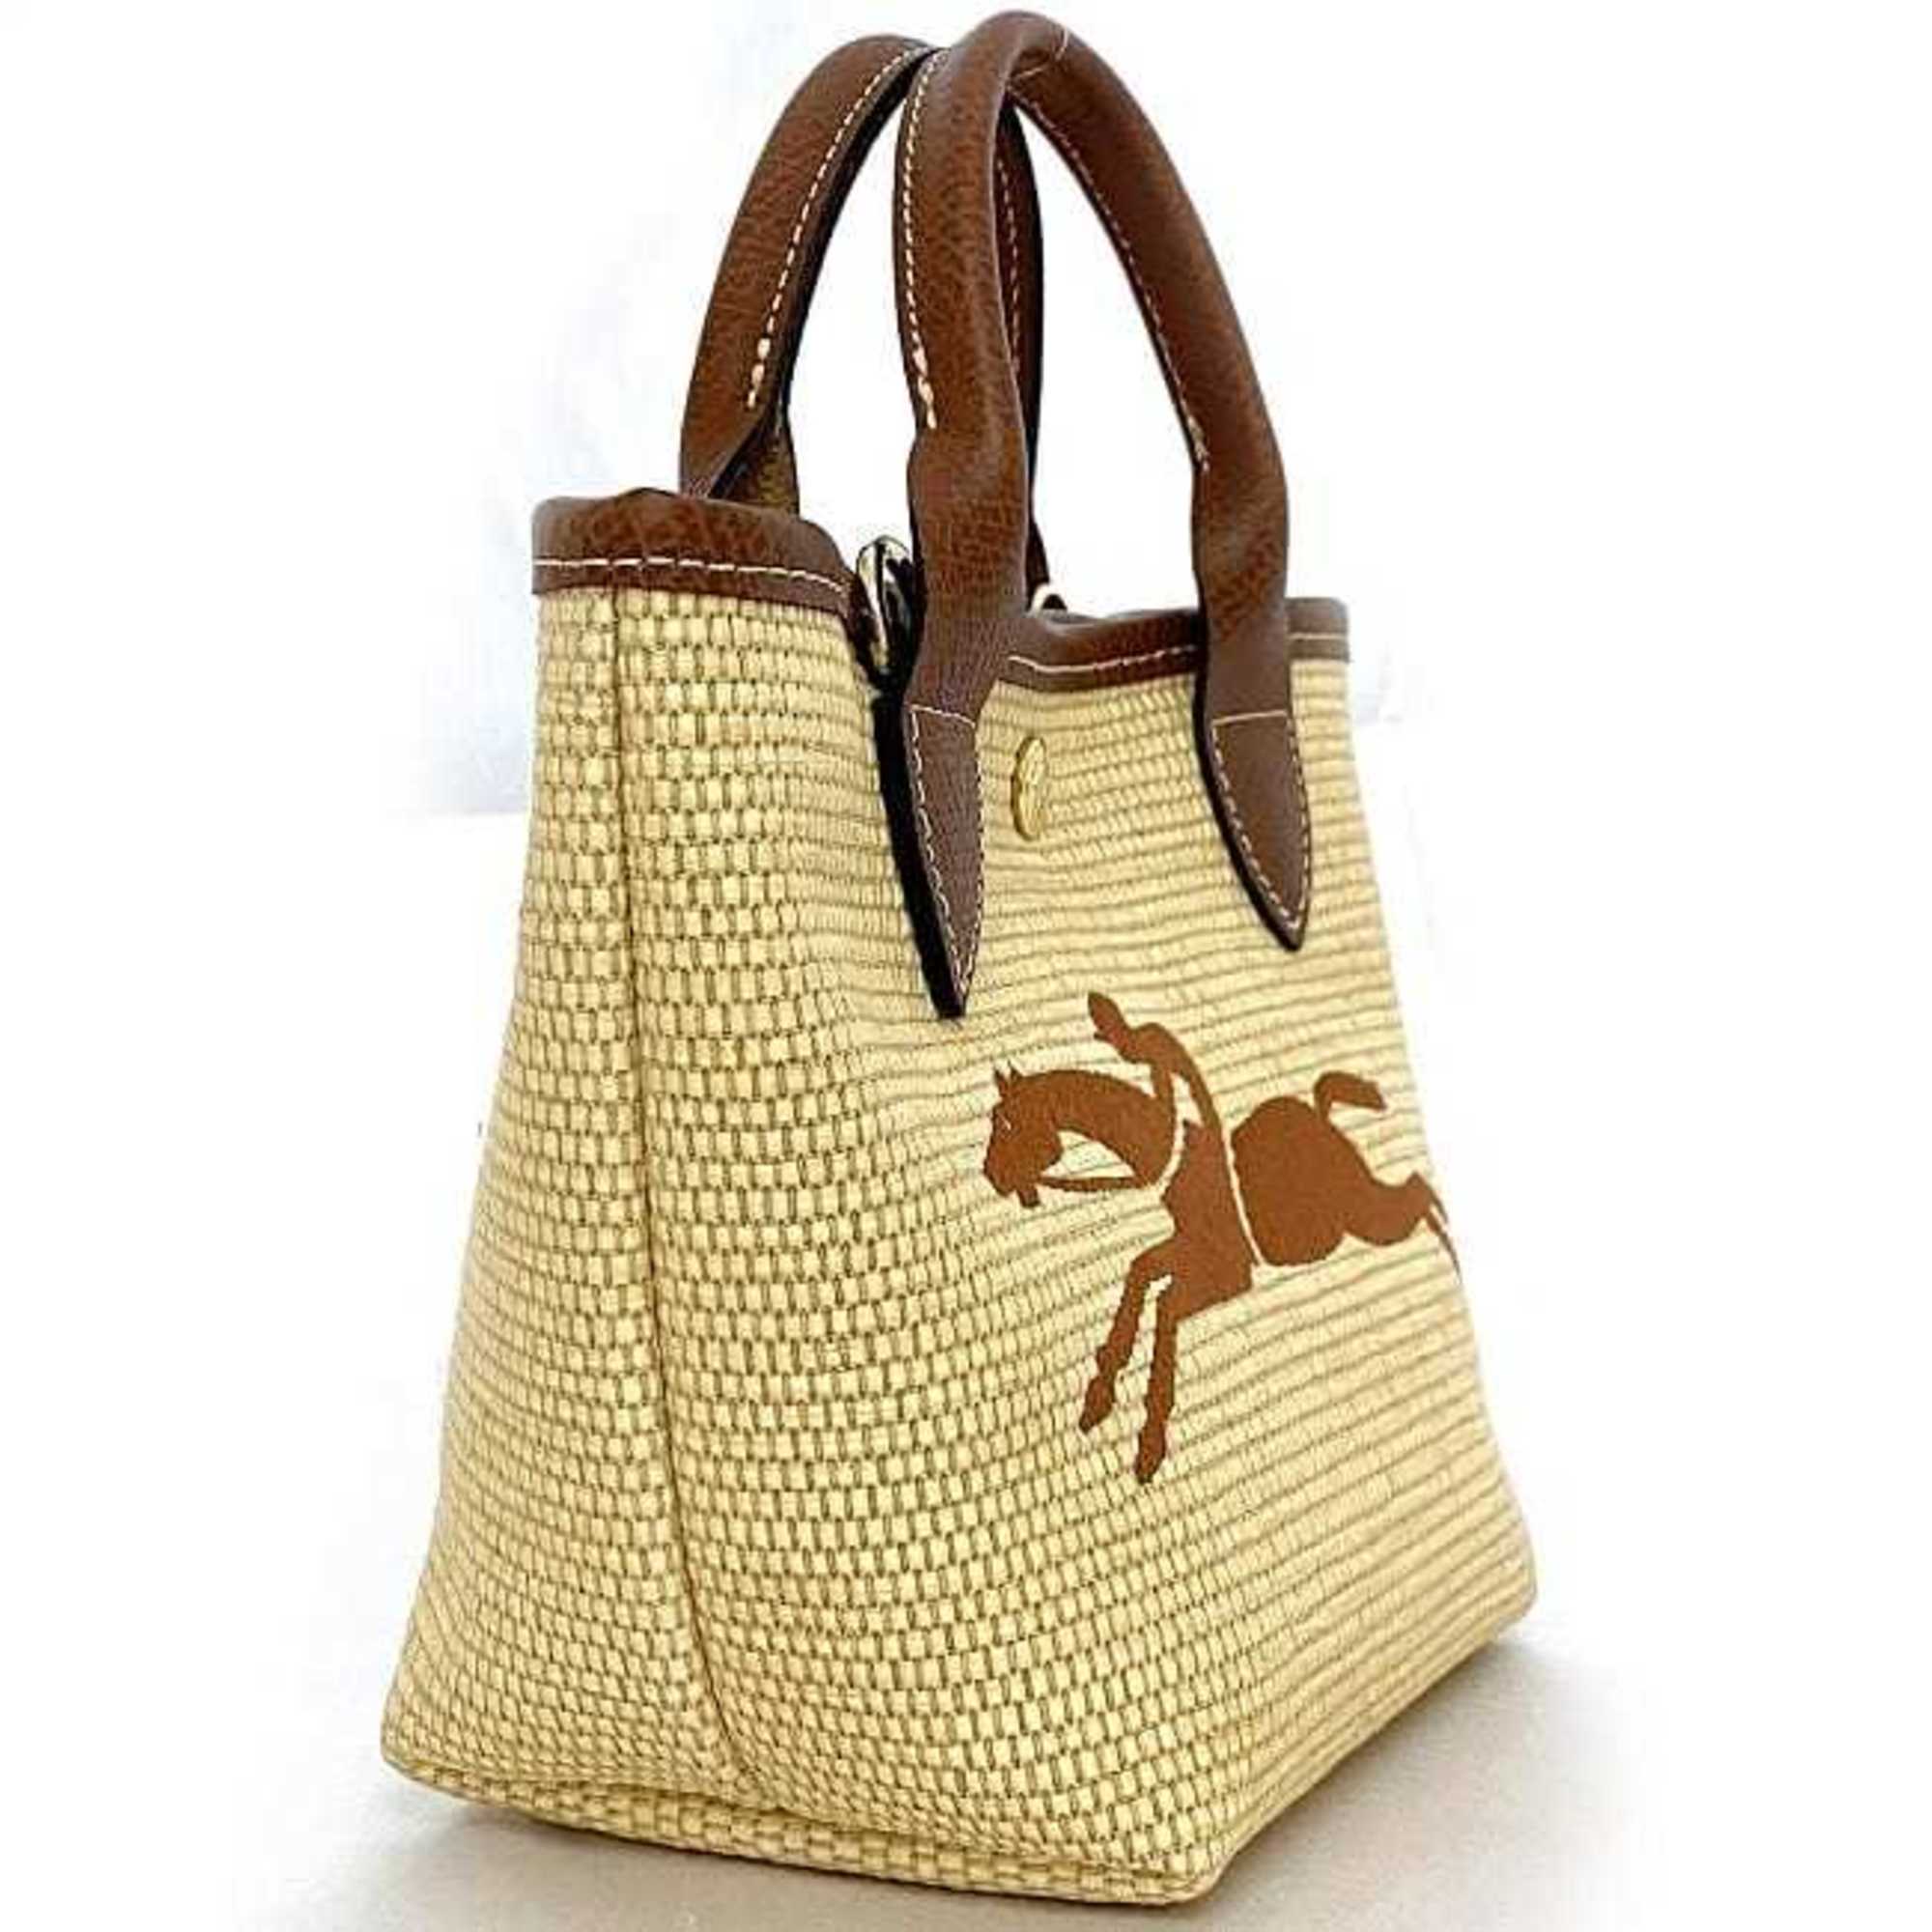 Longchamp 2-way bag beige brown 10162 f-20620 straw leather LONGCHAMP shoulder compact ladies horse